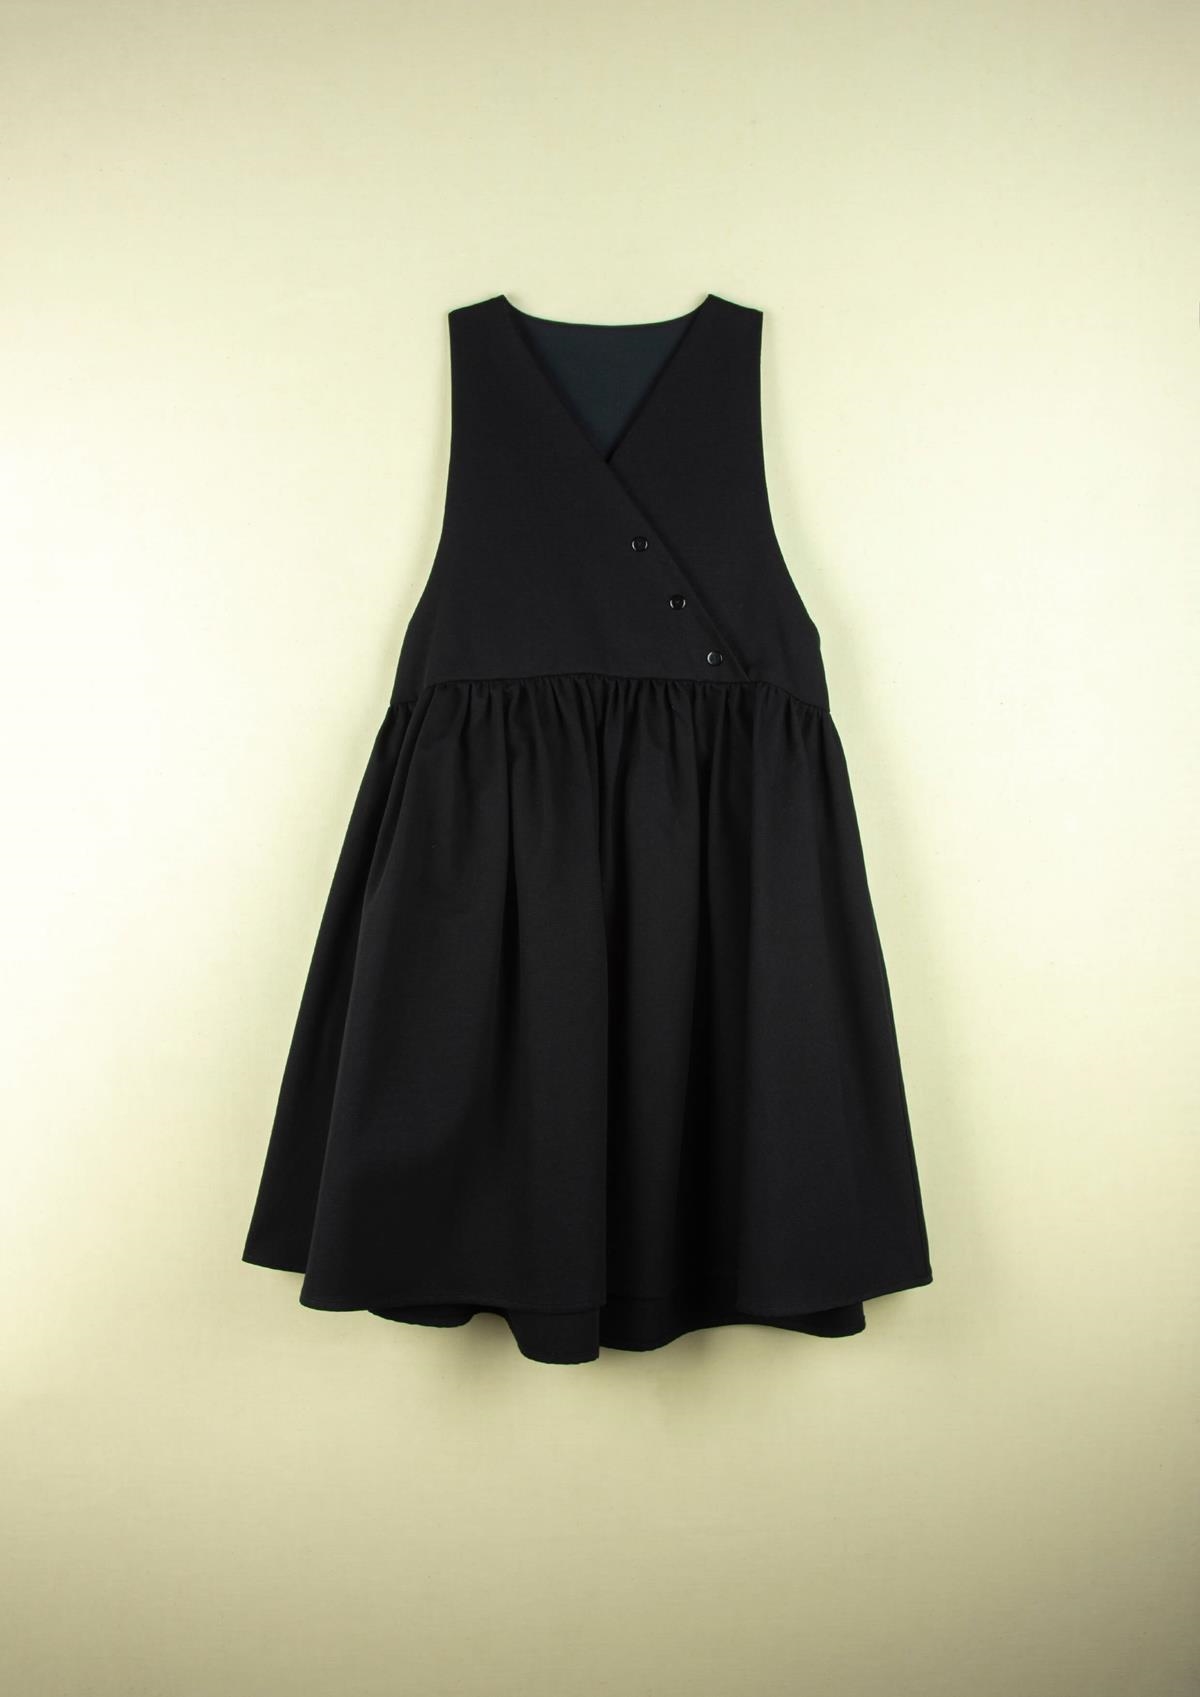 Mod.29.3 Black pinafore dress | AW20.21 Mod.29.3 Black pinafore dress | 1